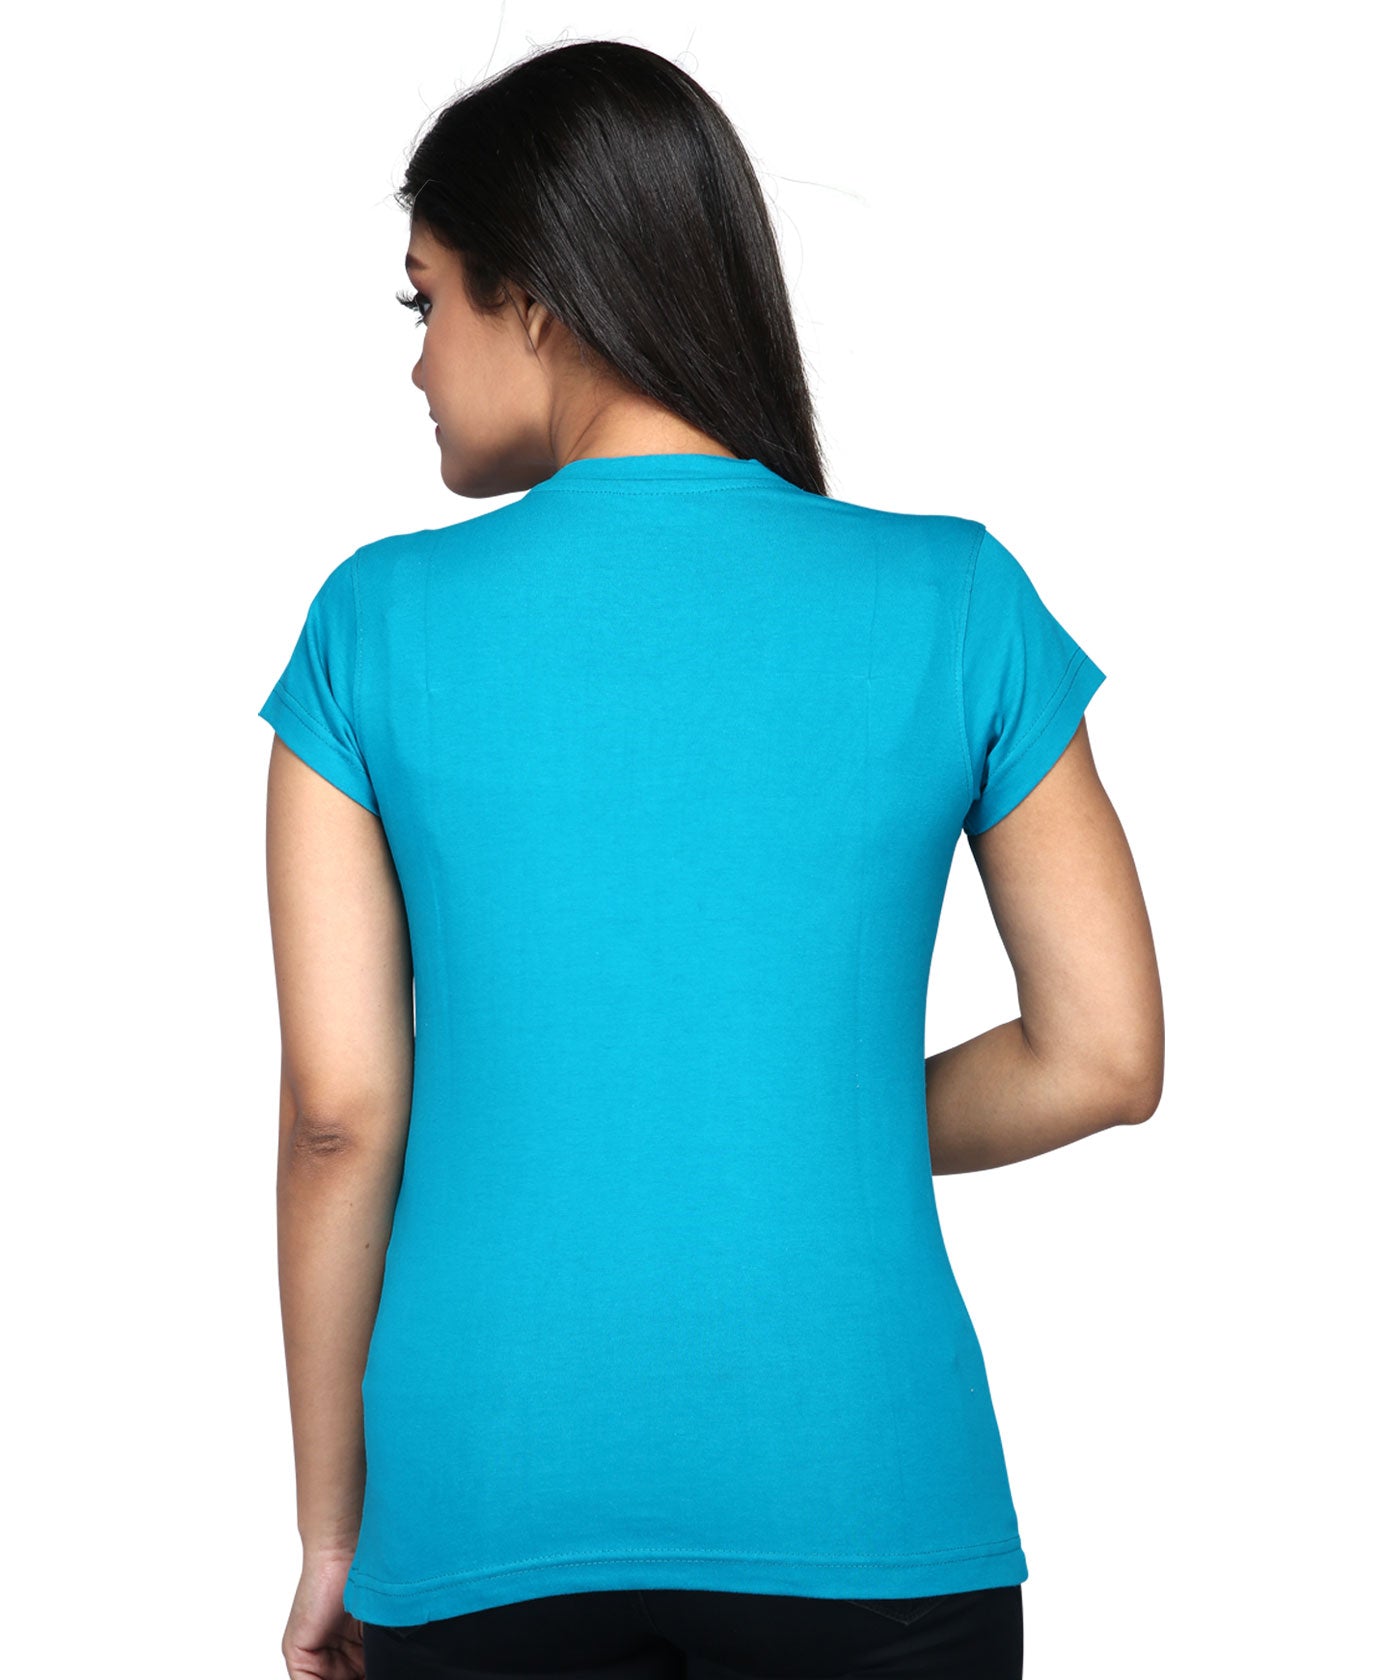 Design Border - Block Print Tees for Women - Turquoise